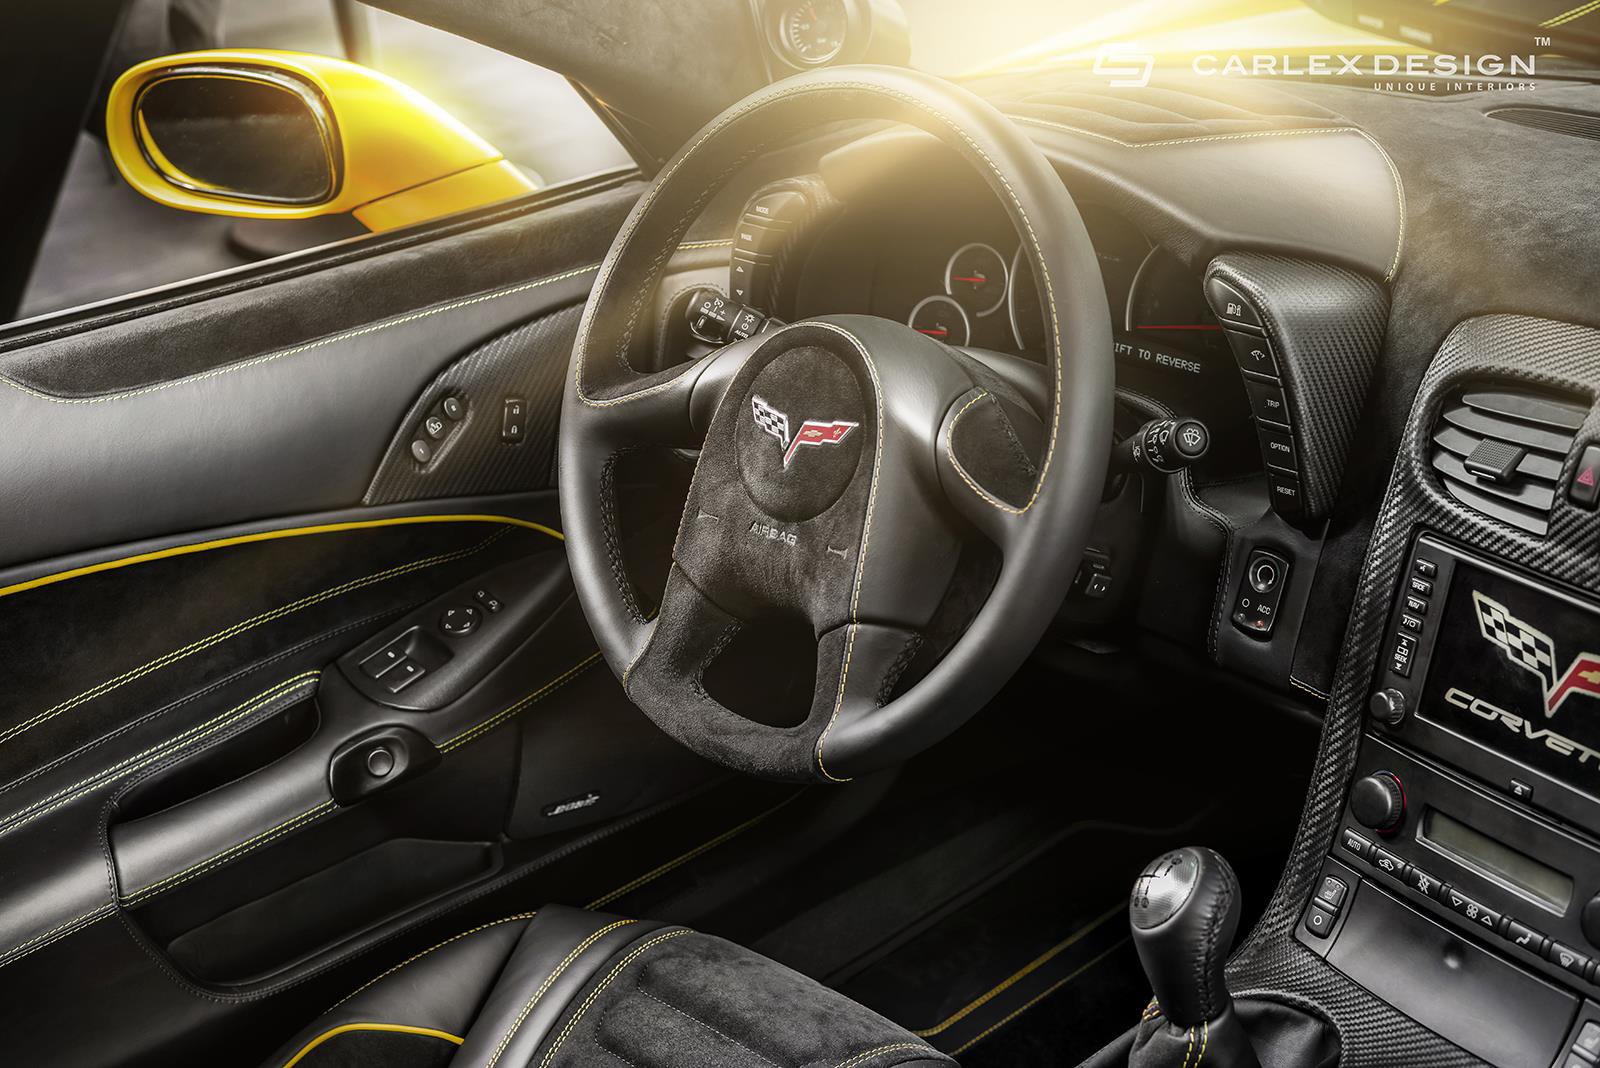 Carlex Design поработал над интерьером Corvette C6.